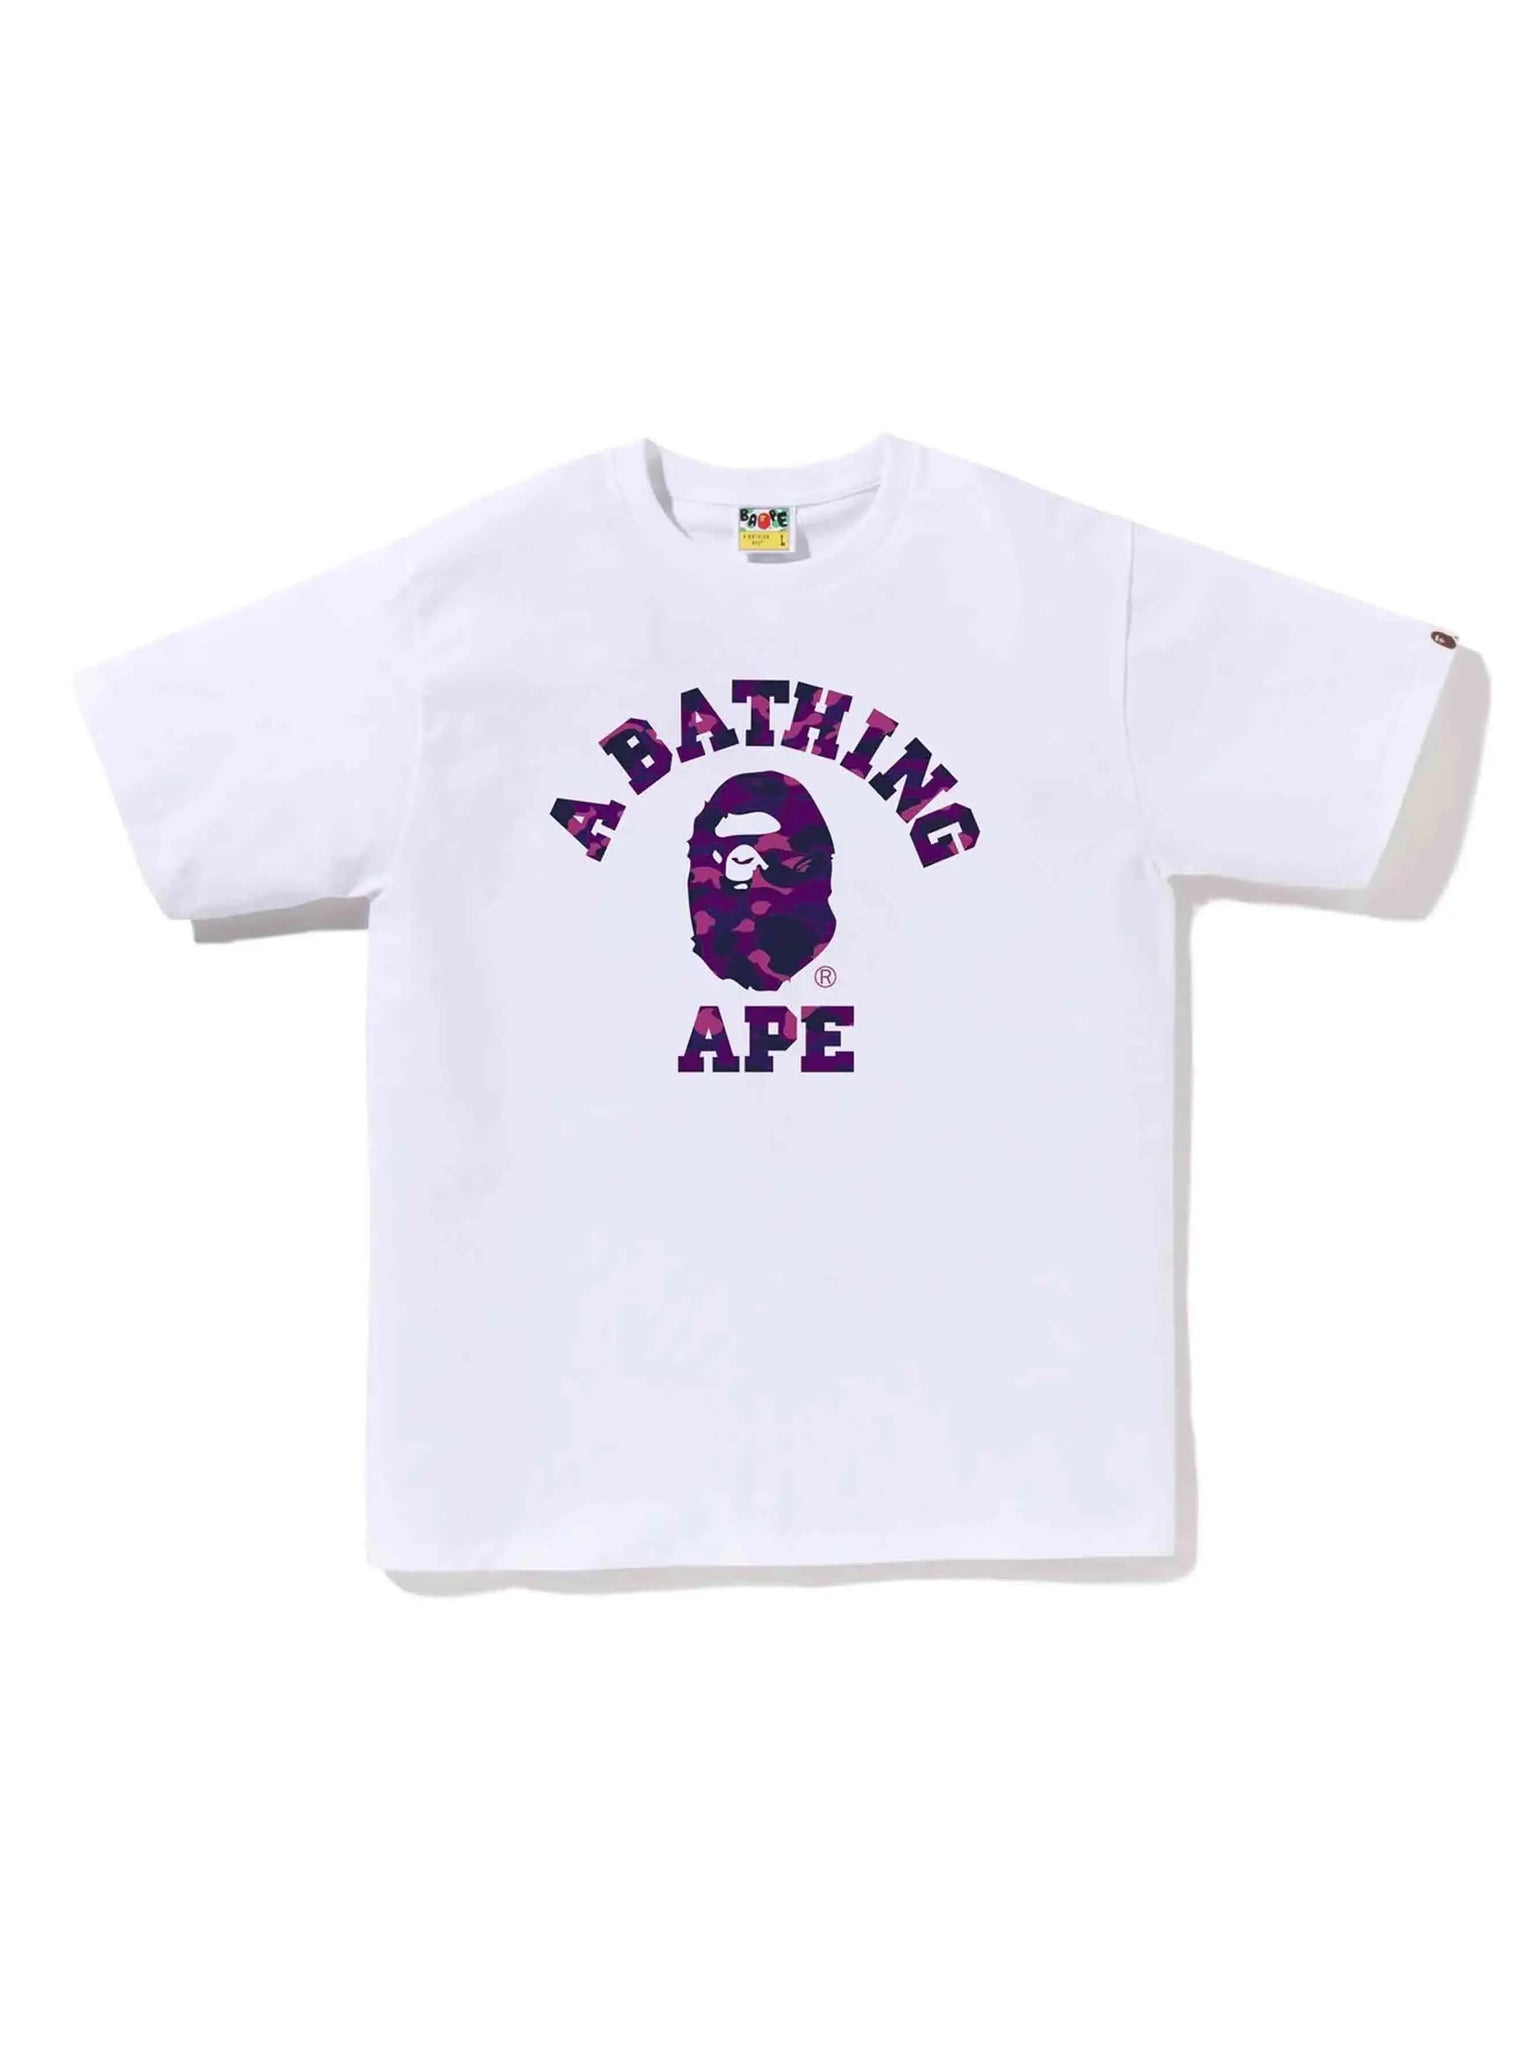 A Bathing Ape BAPE Color Camo College Tee White Purple - Prior